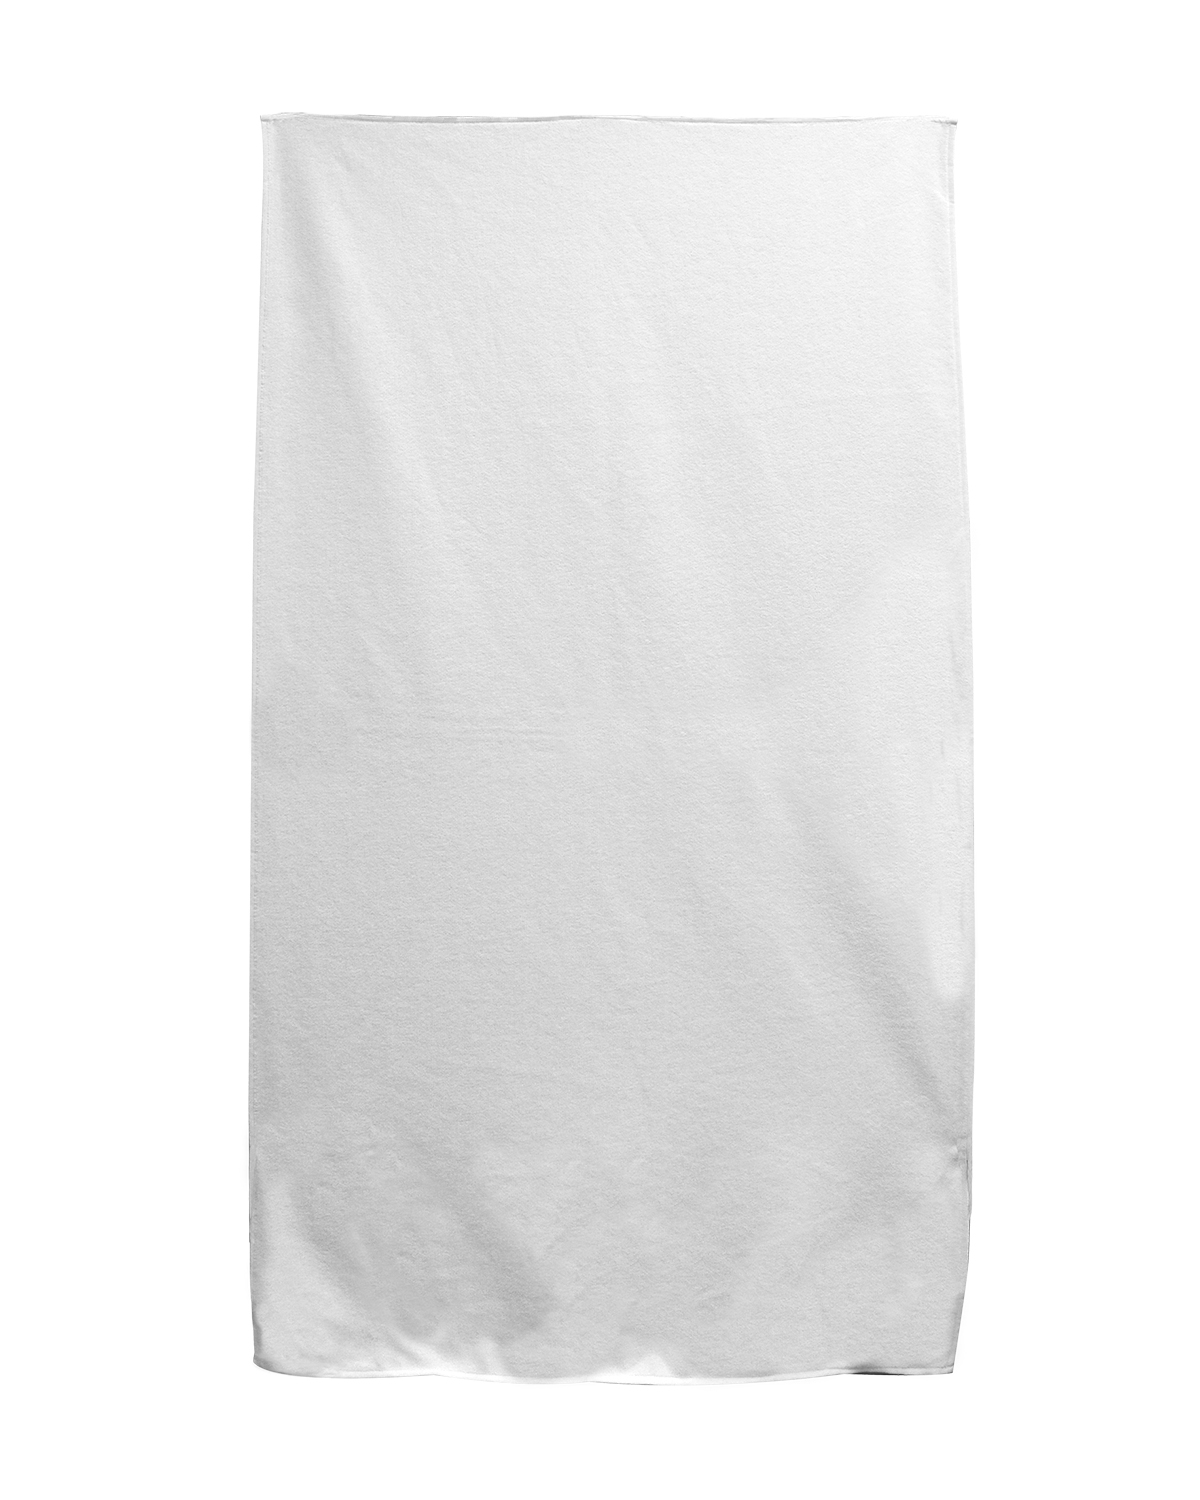 'Carmel Towel Company CSB3060 Sublimation Velour Towel'